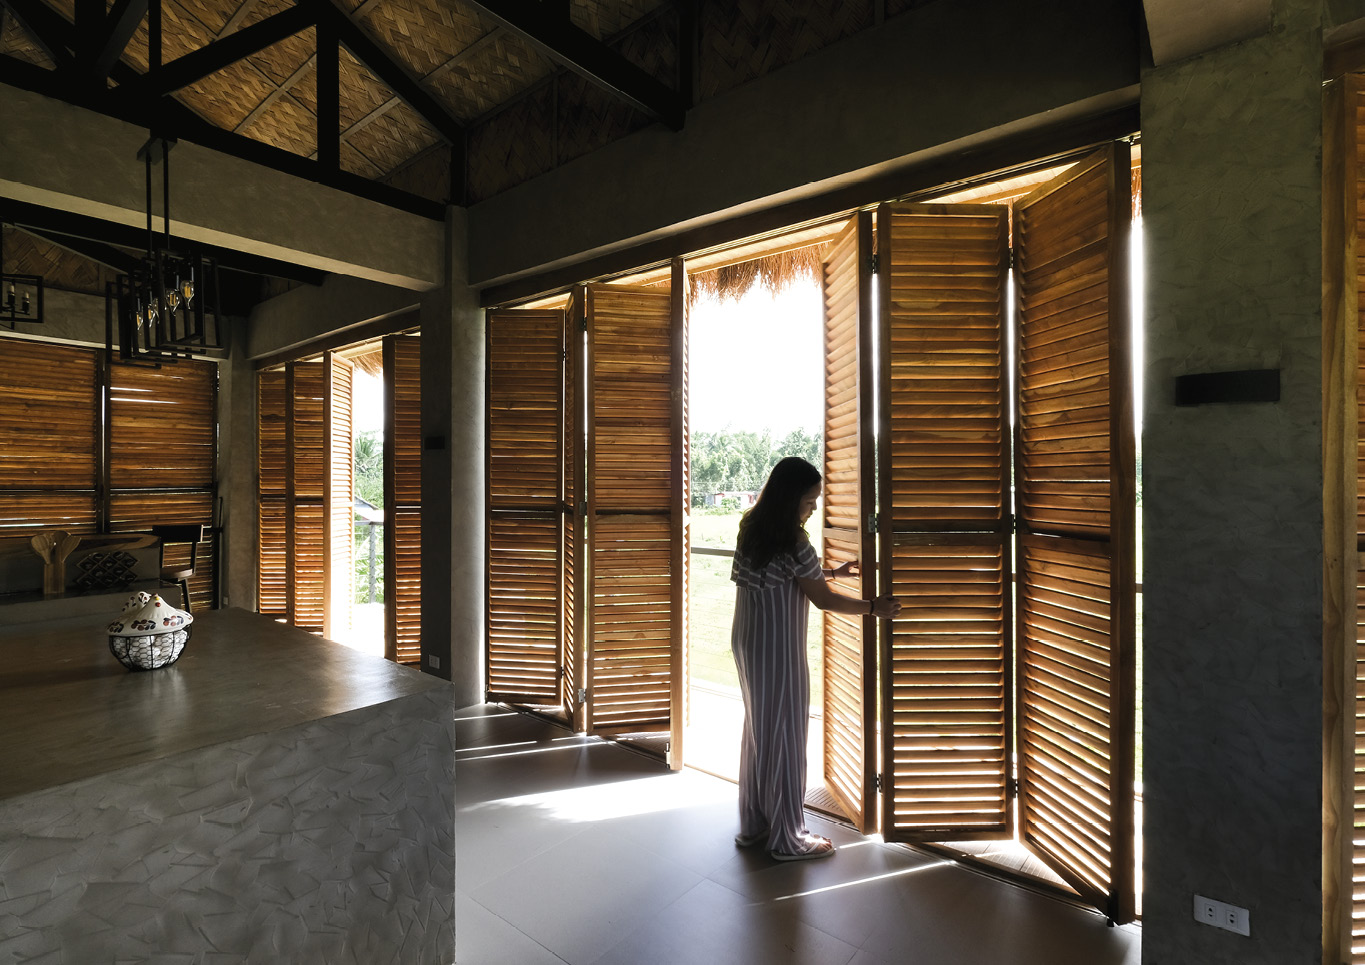 Contemporary nipa hut interior shot - windows